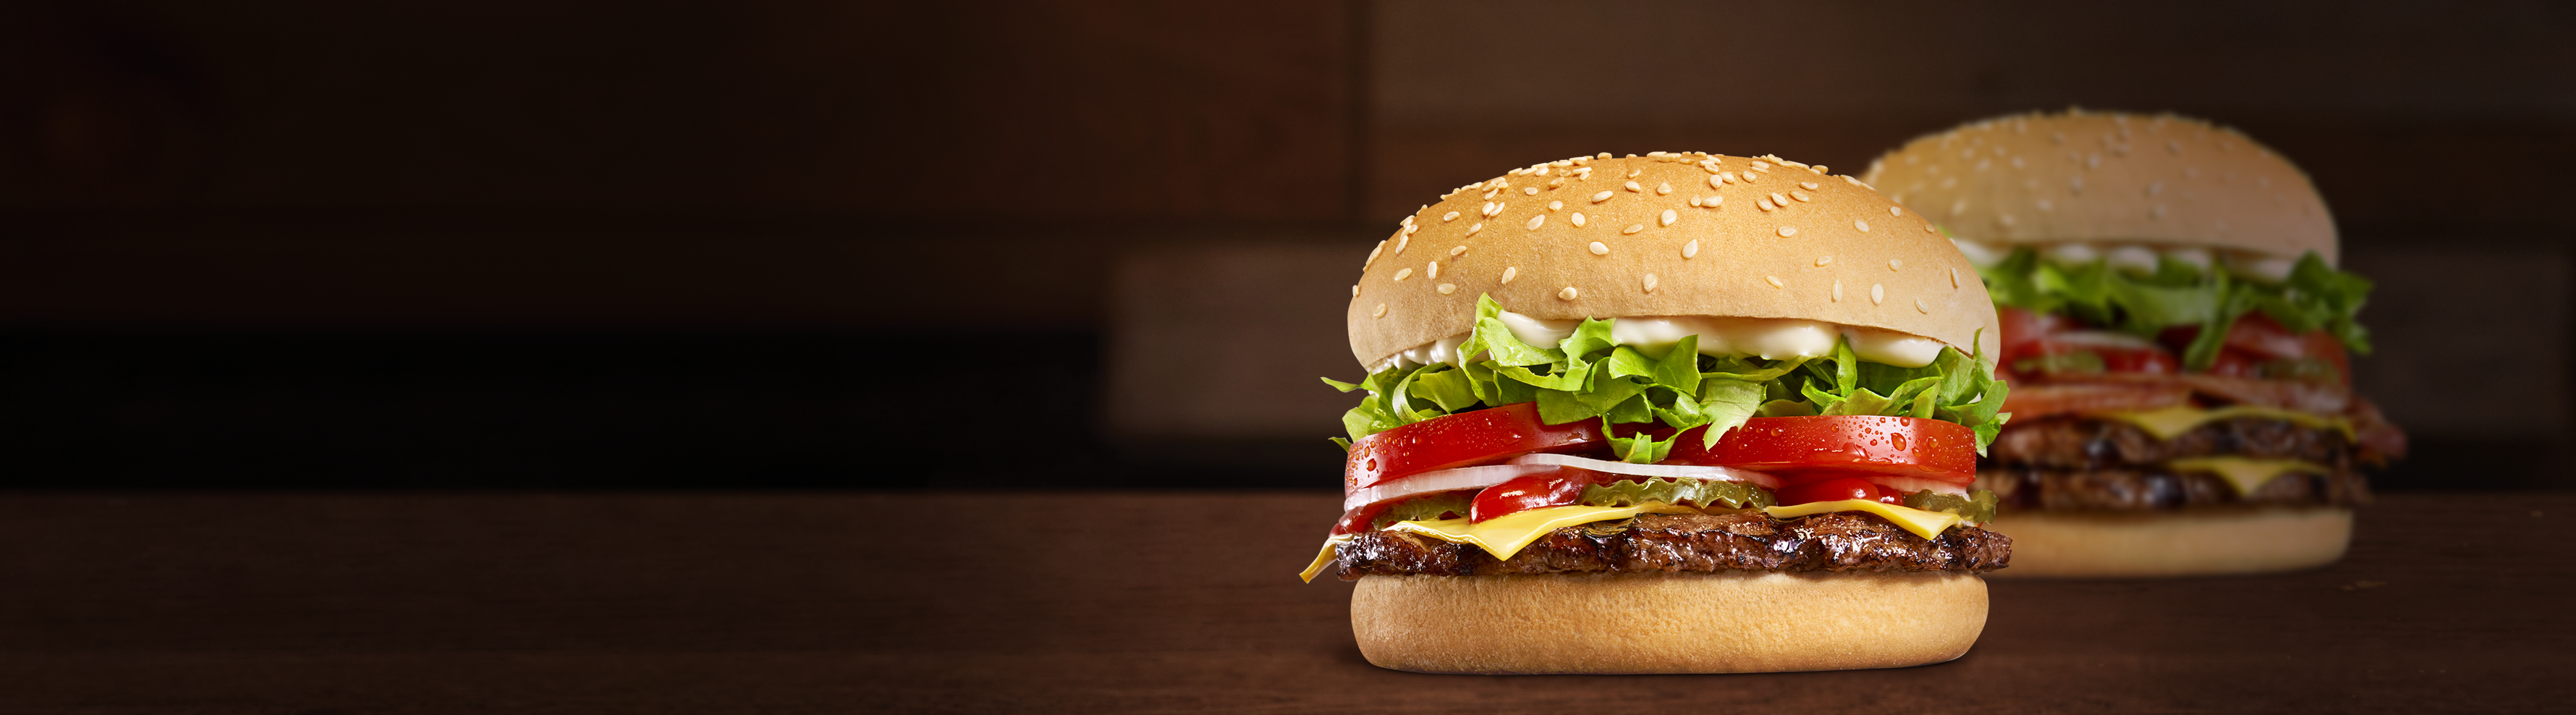 Whopper® & Beef Burgers - Hungry Jack's Australia